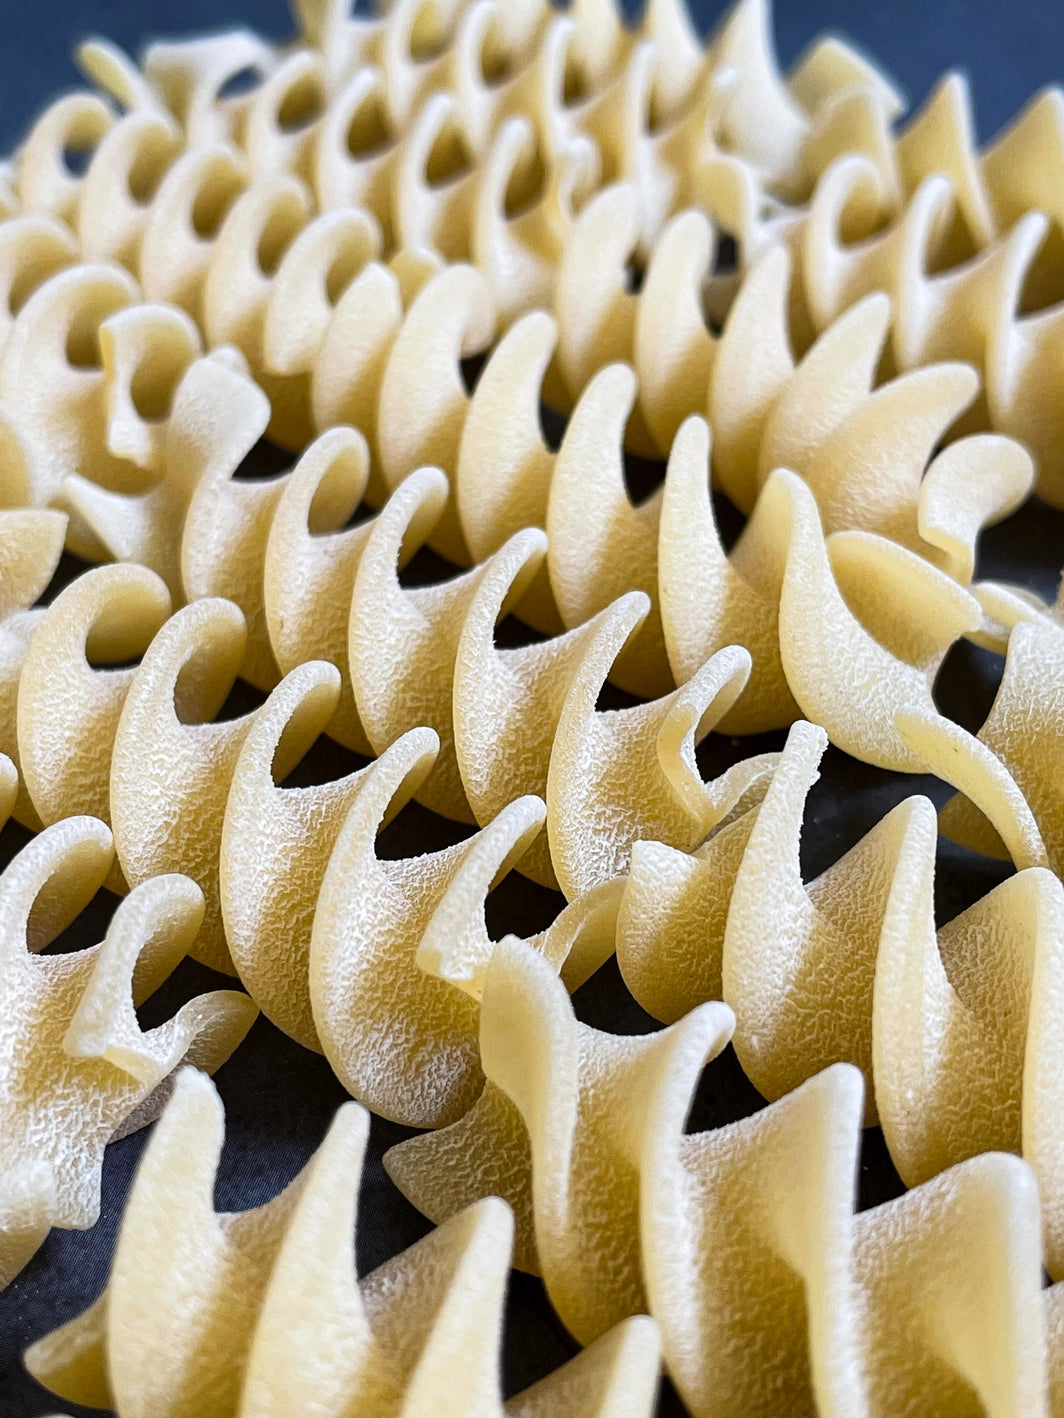 Fussilloni - pasta artesanal 100% italiana